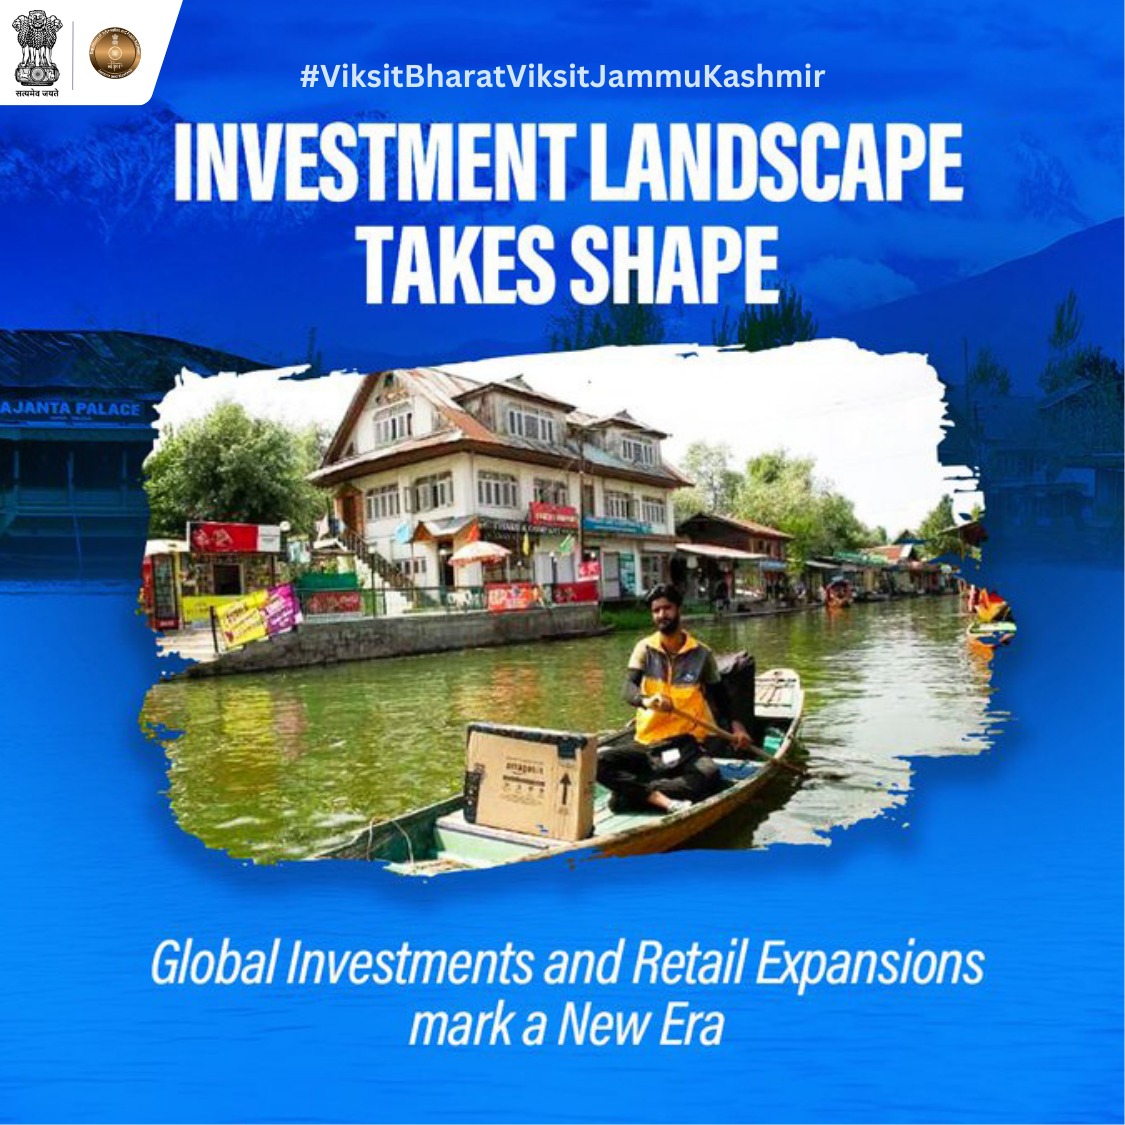 #ViksitBharatViksitJnK 'Investment Landscape Takes Shape' announcing a new era of global investments and retail expansions in Jammu and Kashmir, India. #PMInKashmir @airnewsalerts @PIBSrinagar @CBCJammuKashmir @diprjk